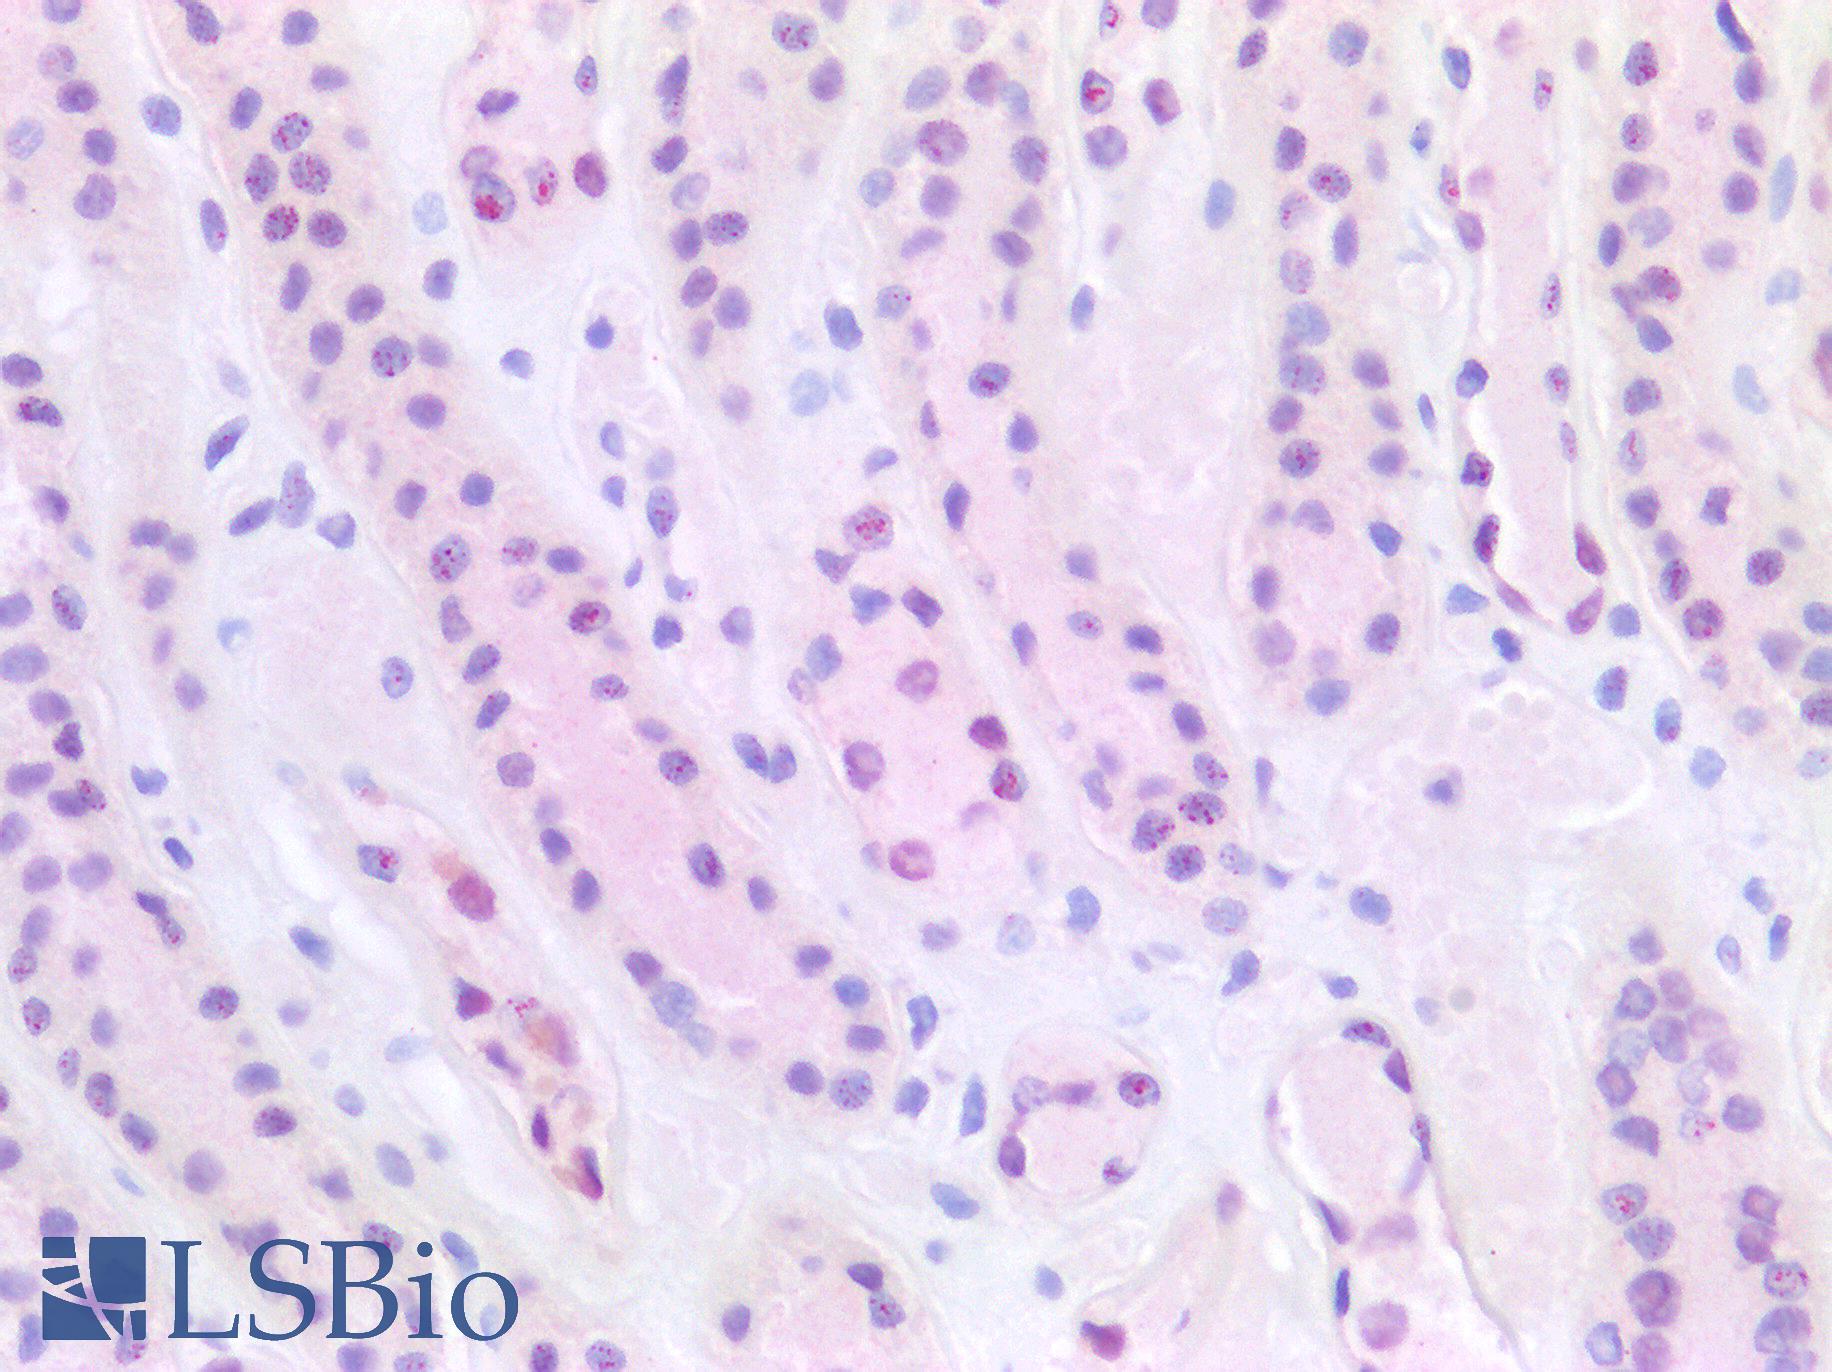 HNF1B / HNF1 Beta Antibody - Human Kidney: Formalin-Fixed, Paraffin-Embedded (FFPE)